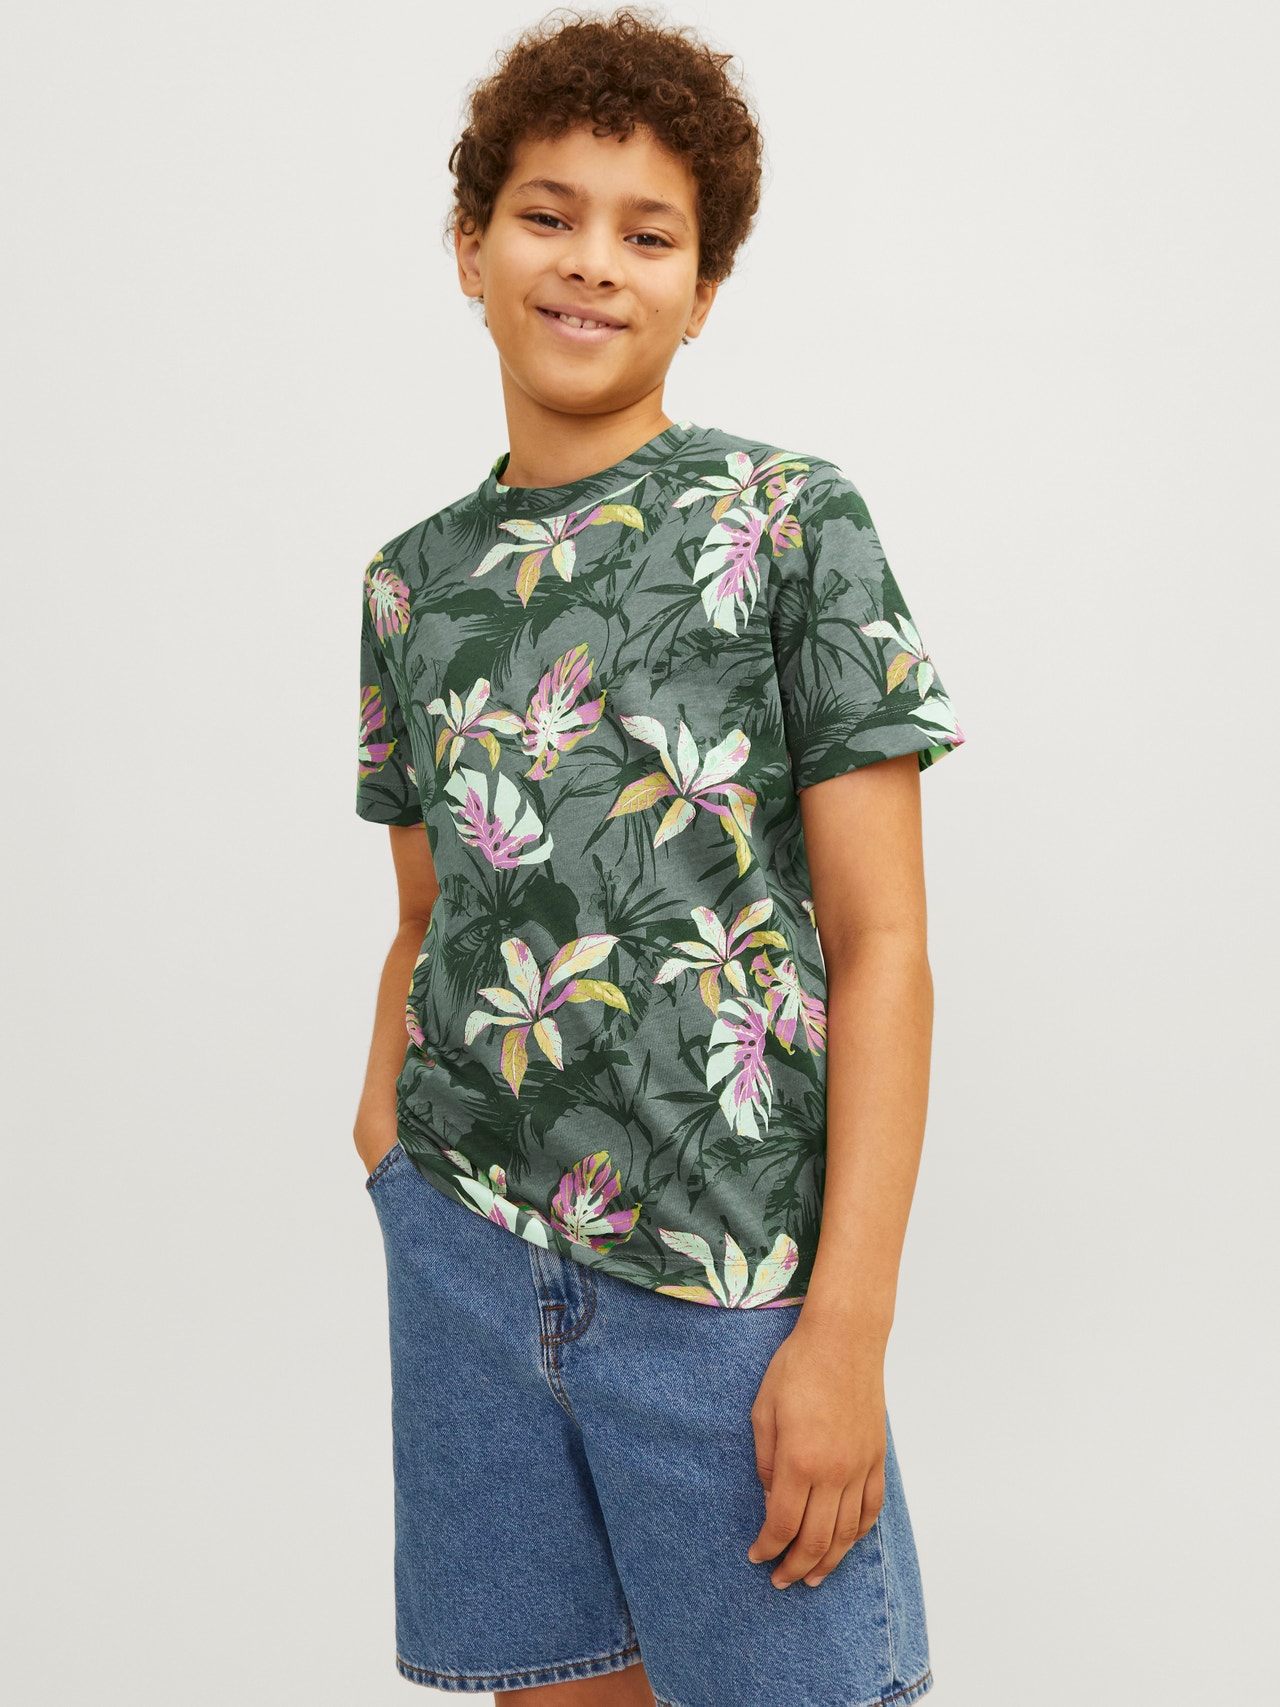 Jack & Jones T-shirt Estampado total Para meninos -Laurel Wreath - 12254029